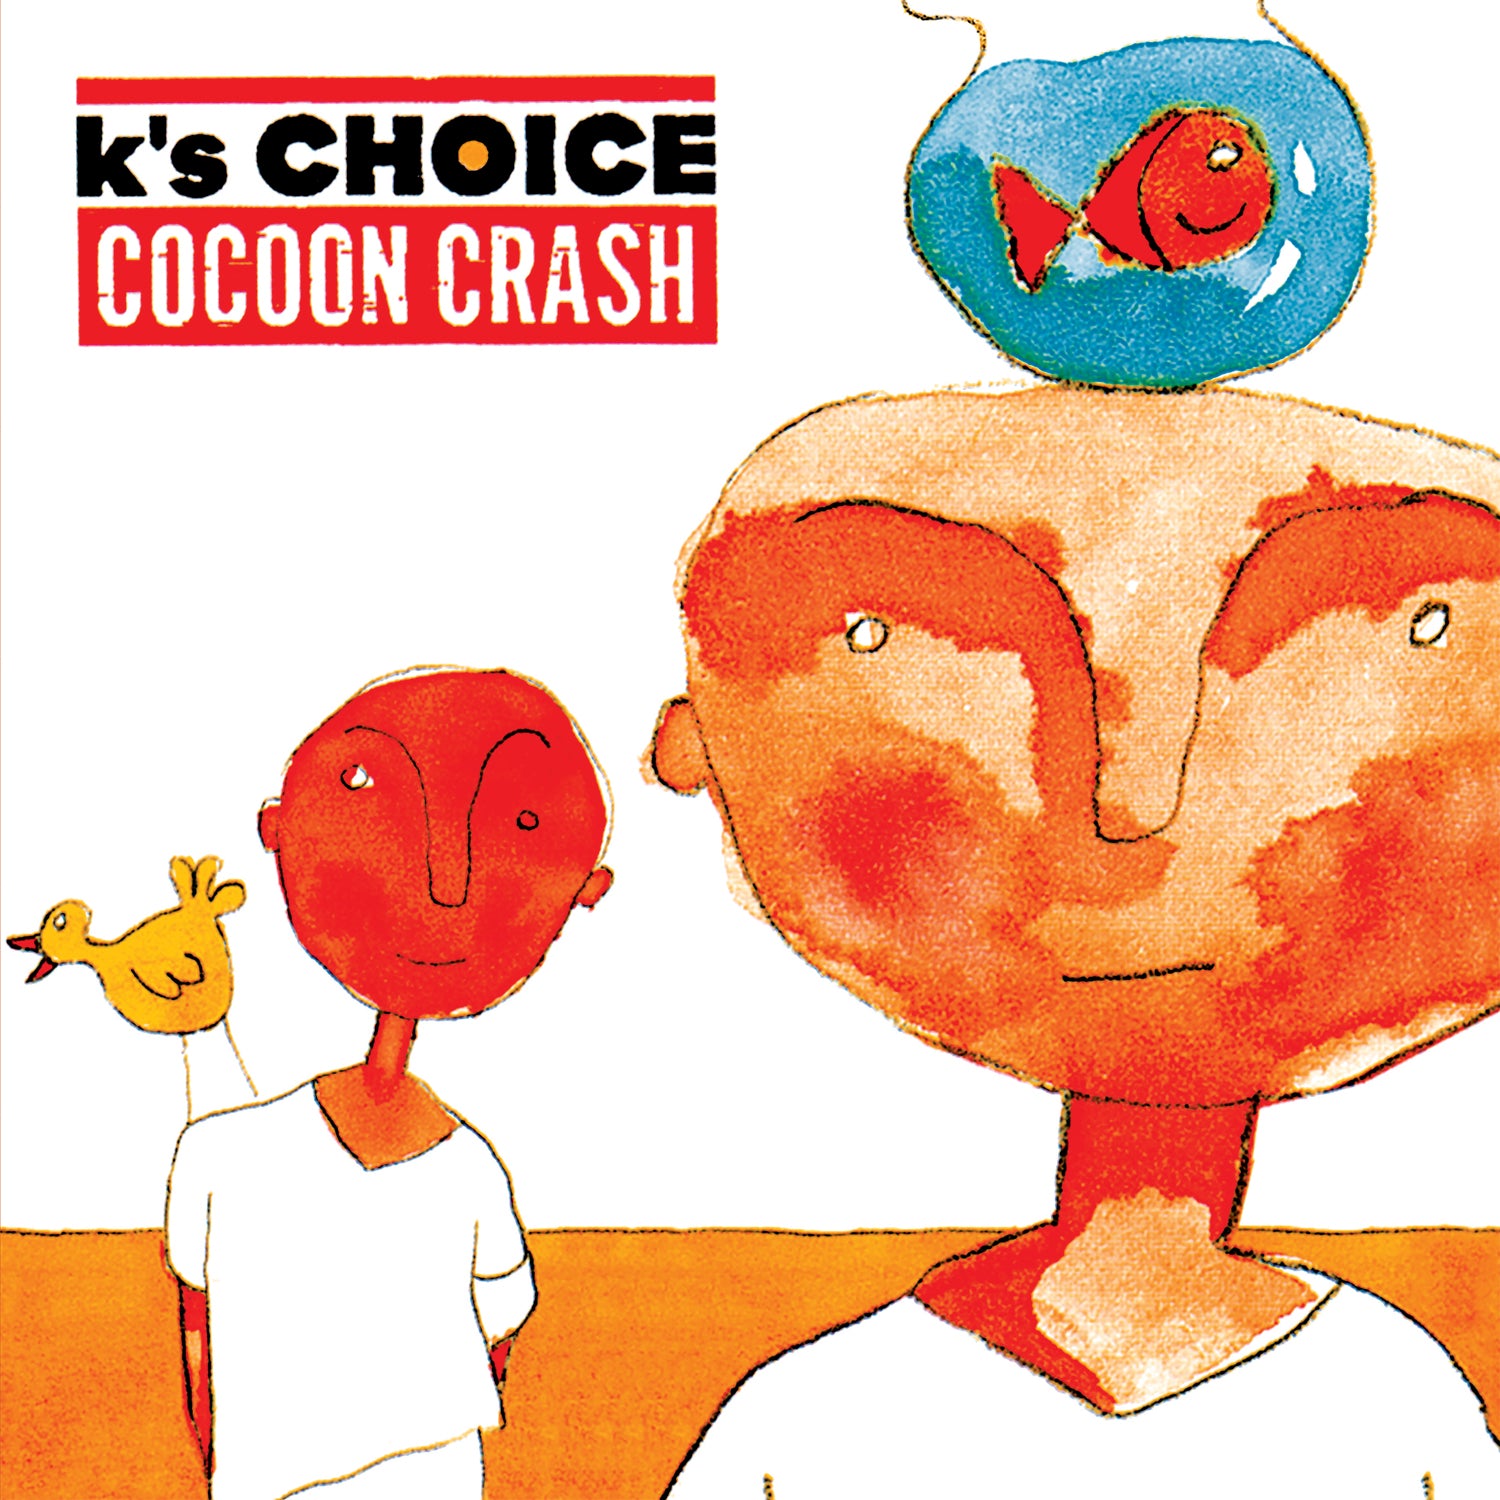 Cocoon Crash